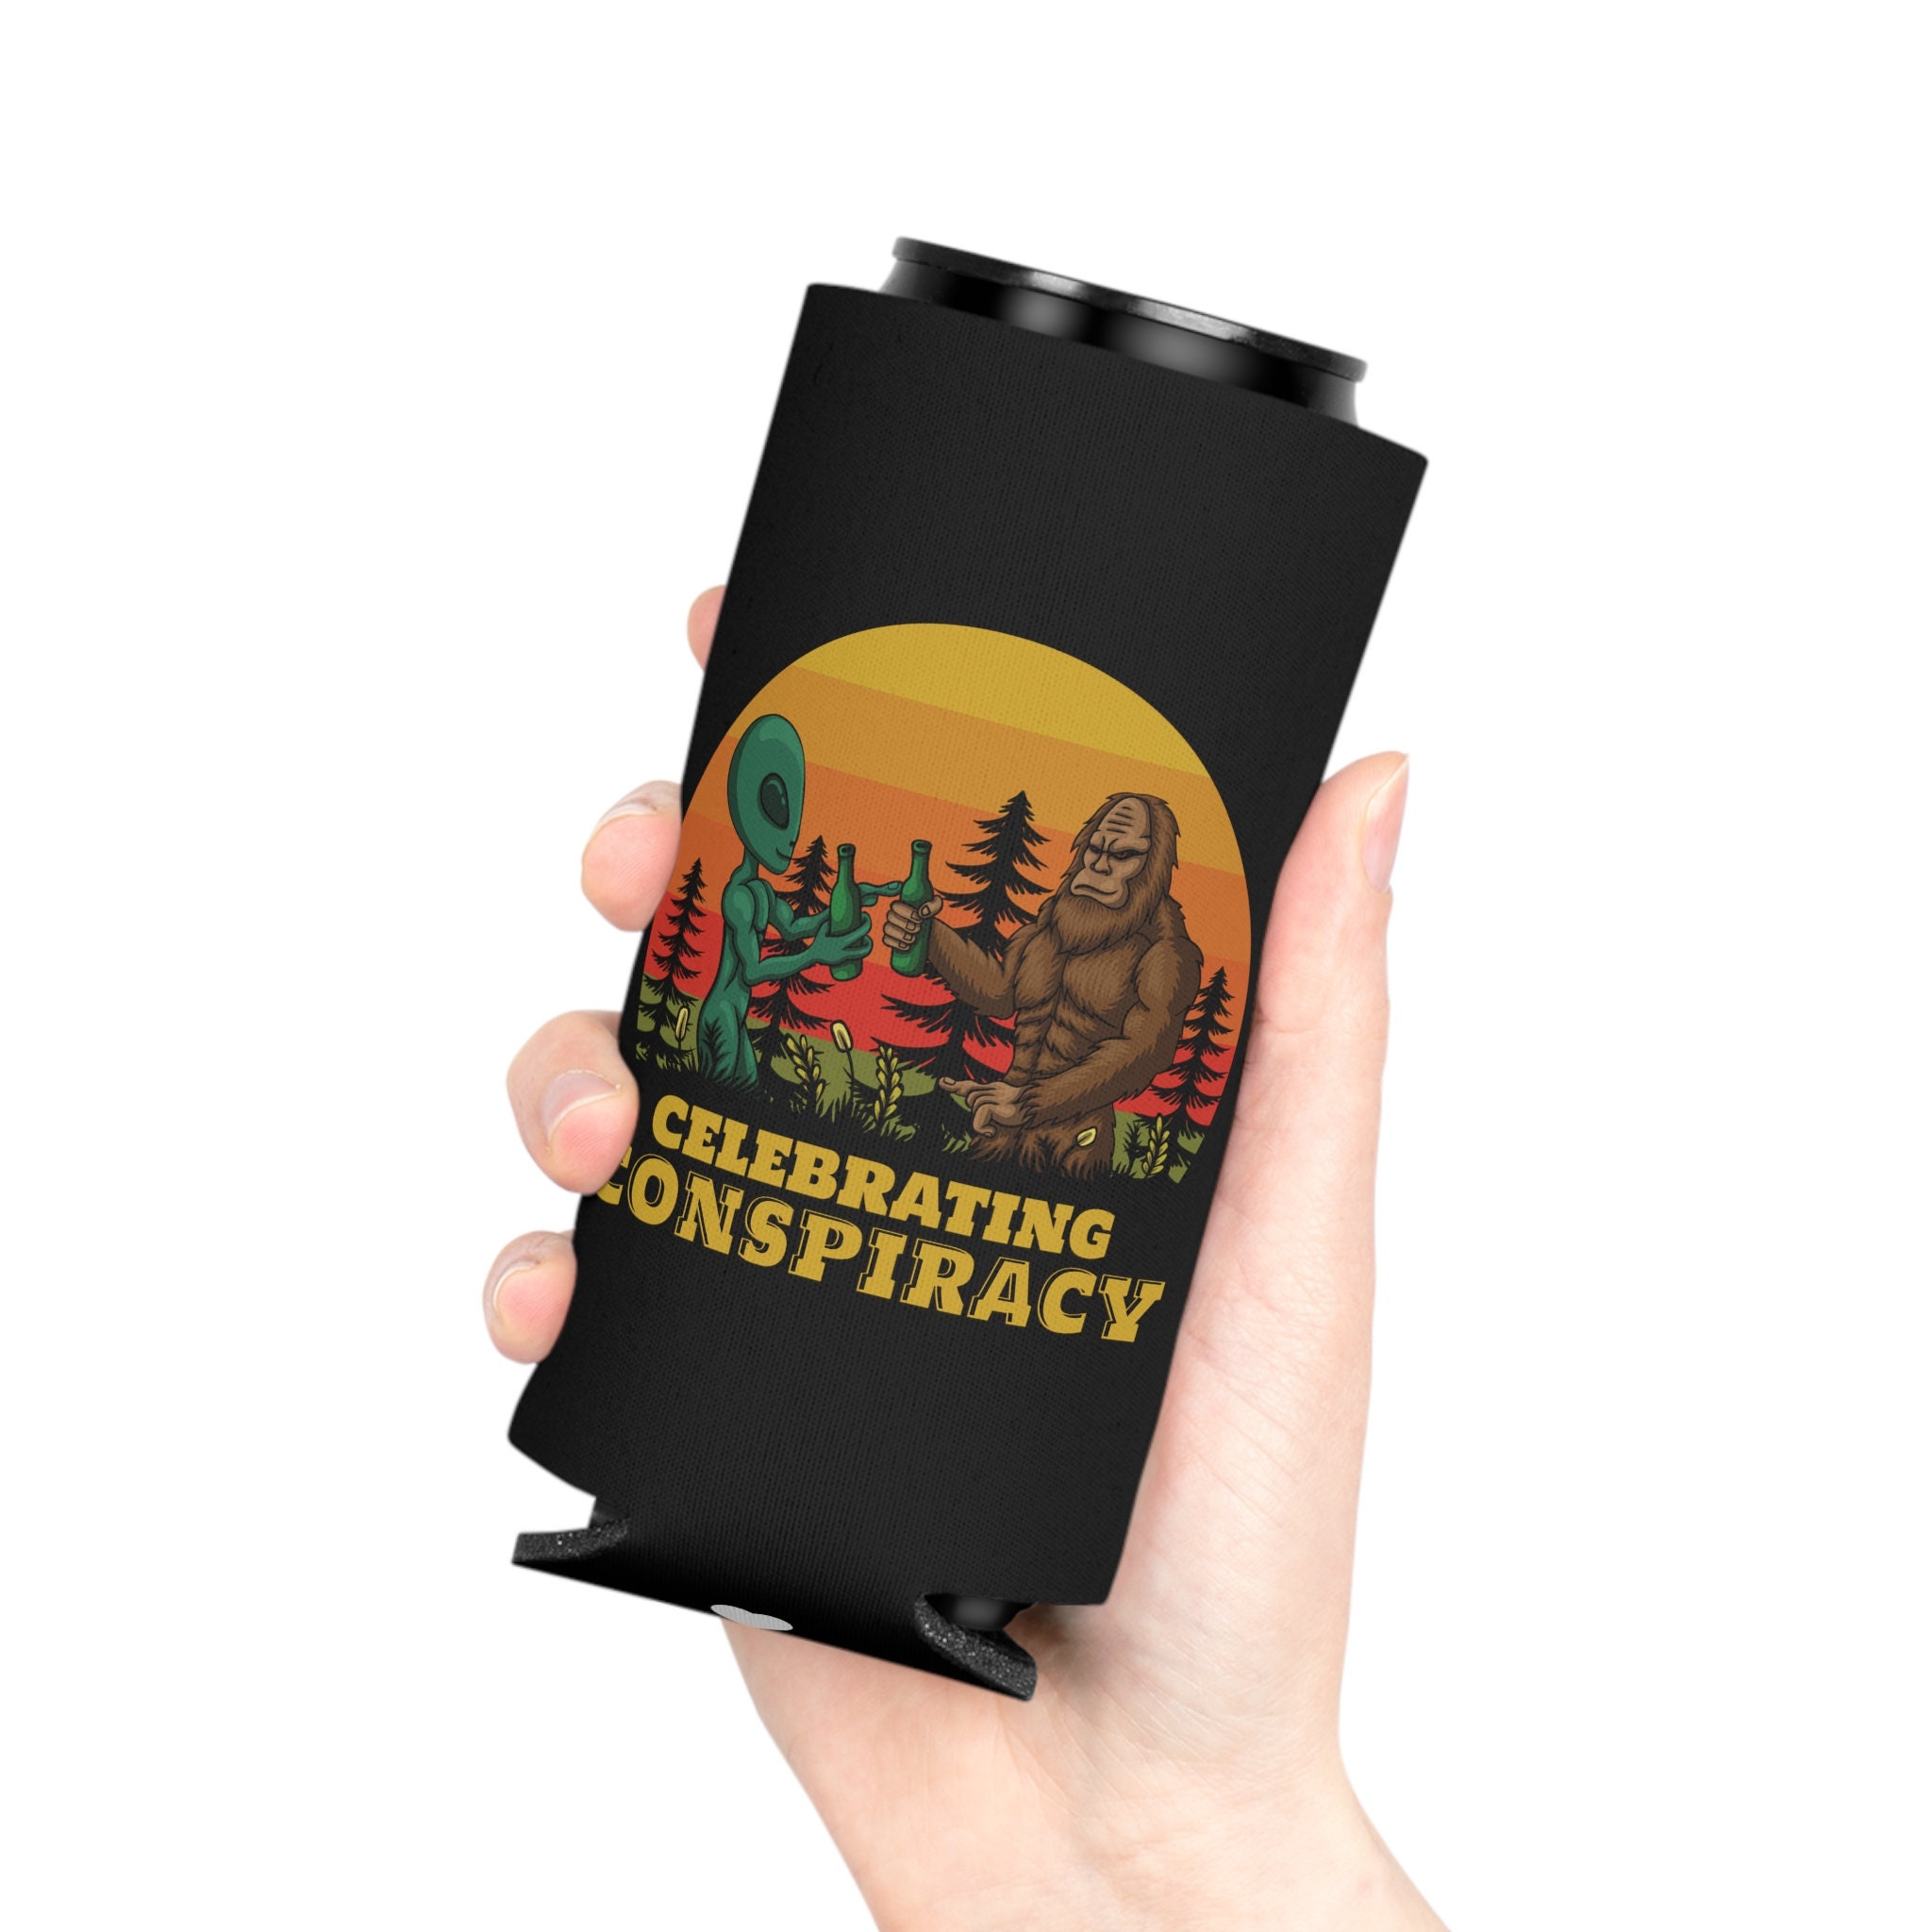 Stay Weird Alien Beer Can Cooler — Lighthouse Paper Co.